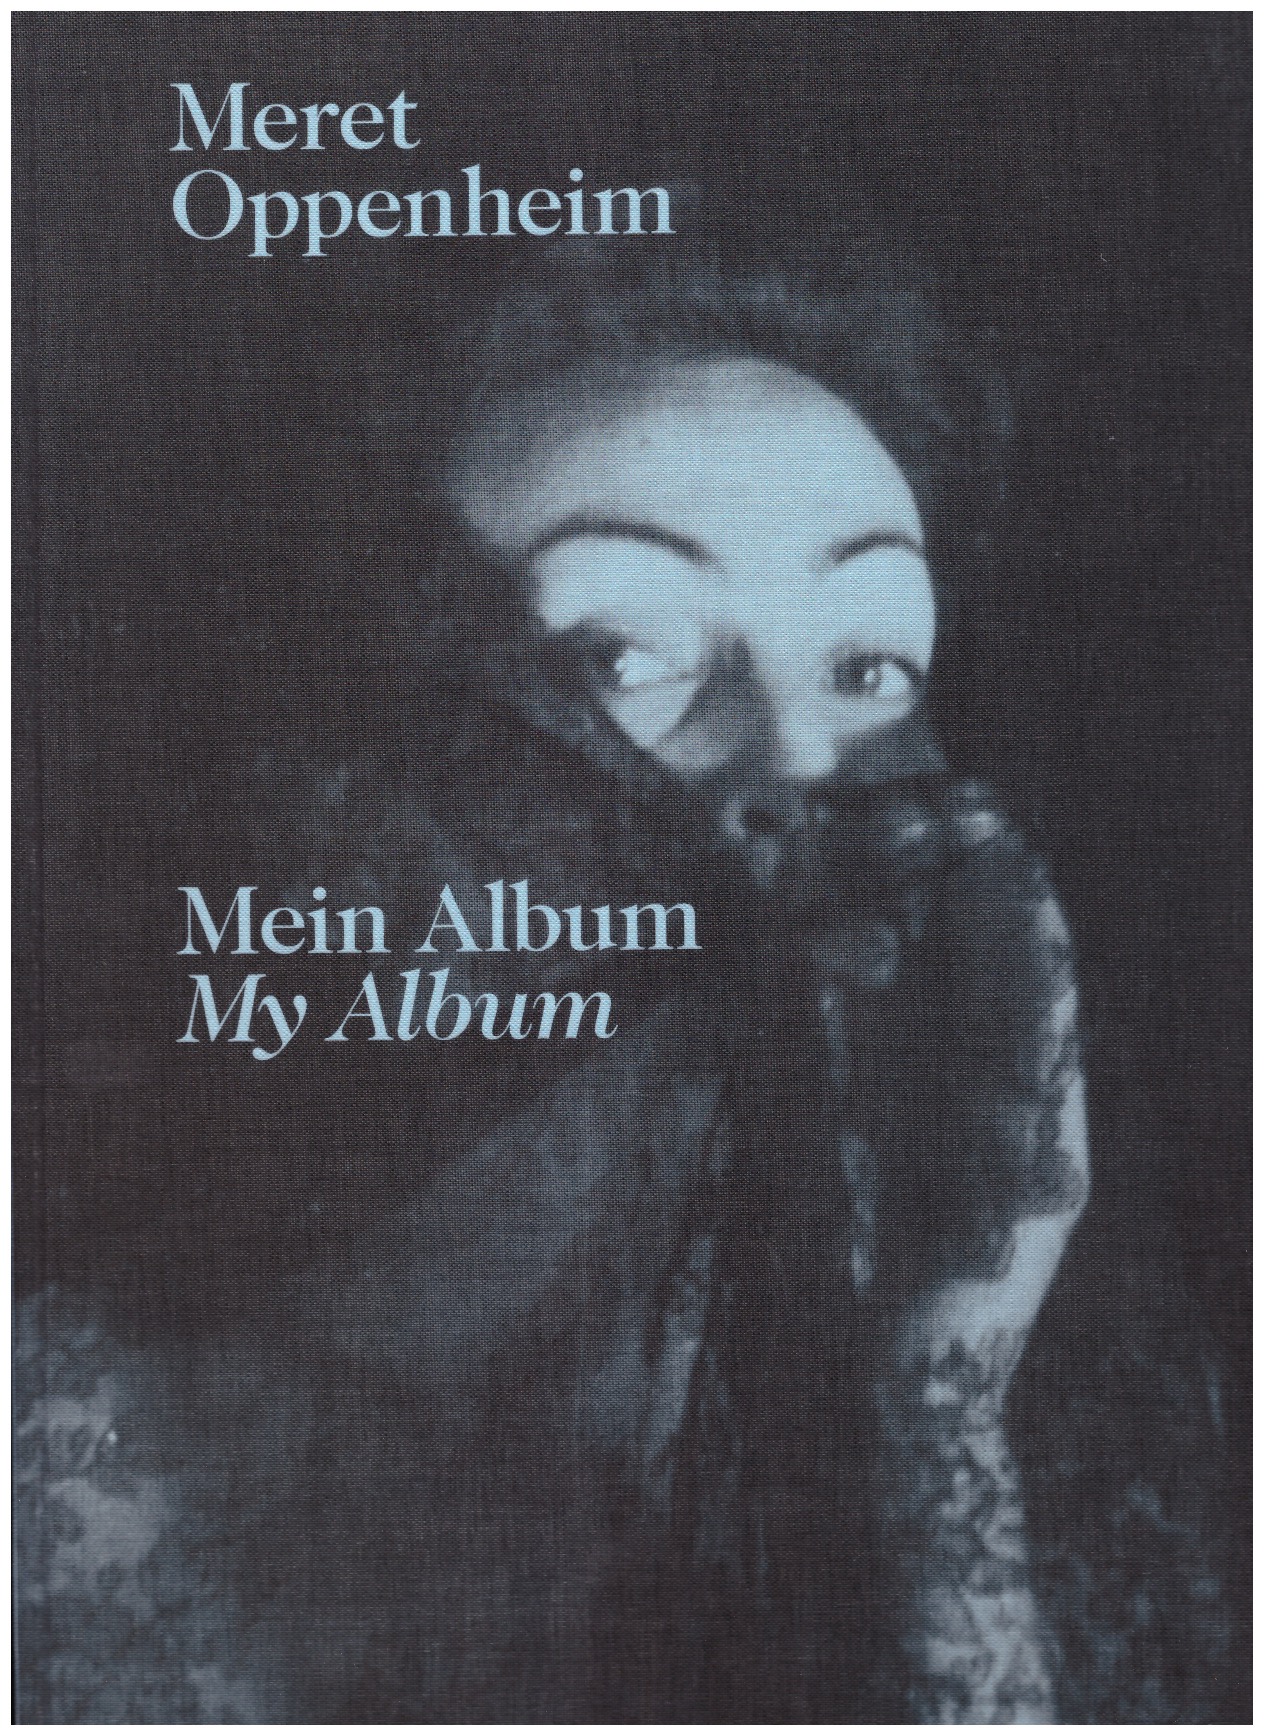 OPPENHEIM, Meret - Mein Album, My Album